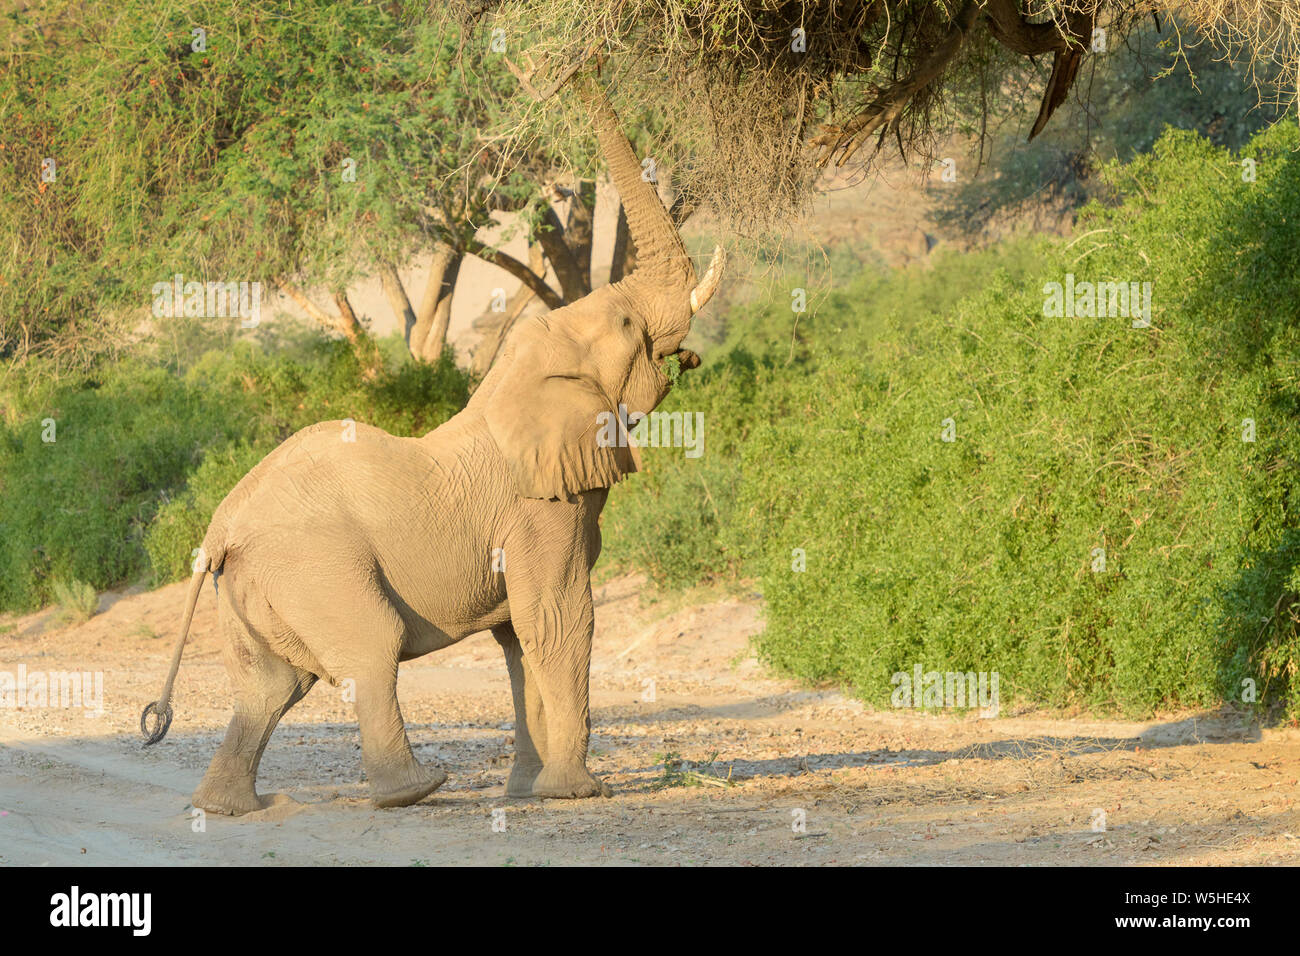 Elefante africano, deserto-atto Elefante africano (Loxodonta africana) mangiando foglie e rametti di acacia, Kaokoland, Hoanib deserto, Namibia Foto Stock